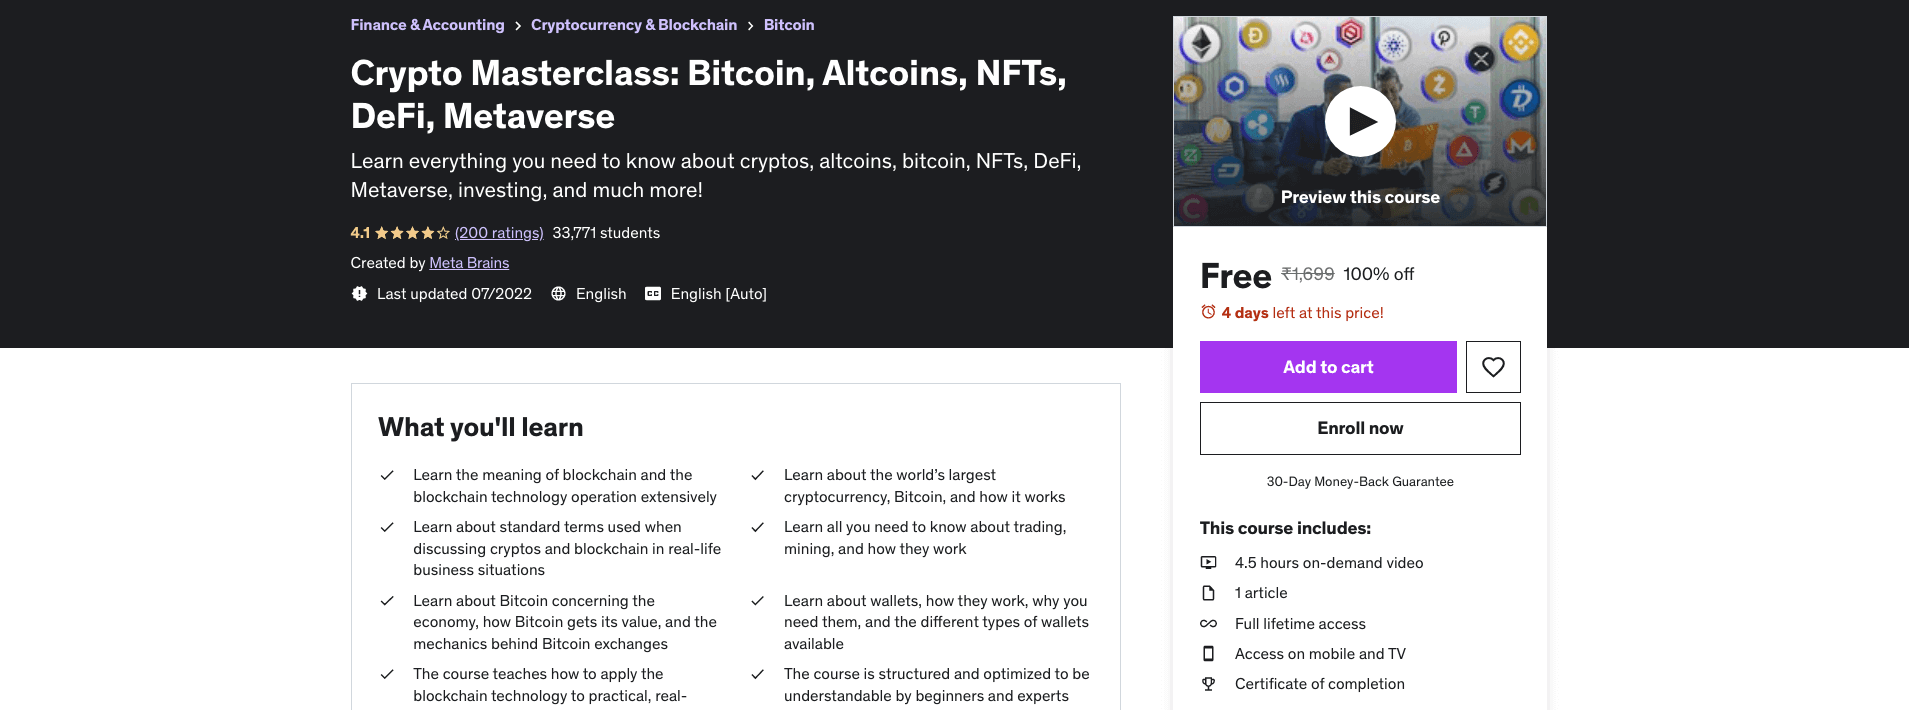 Crypto Masterclass: Bitcoin, Altcoins, NFTs, DeFi, Metaverse